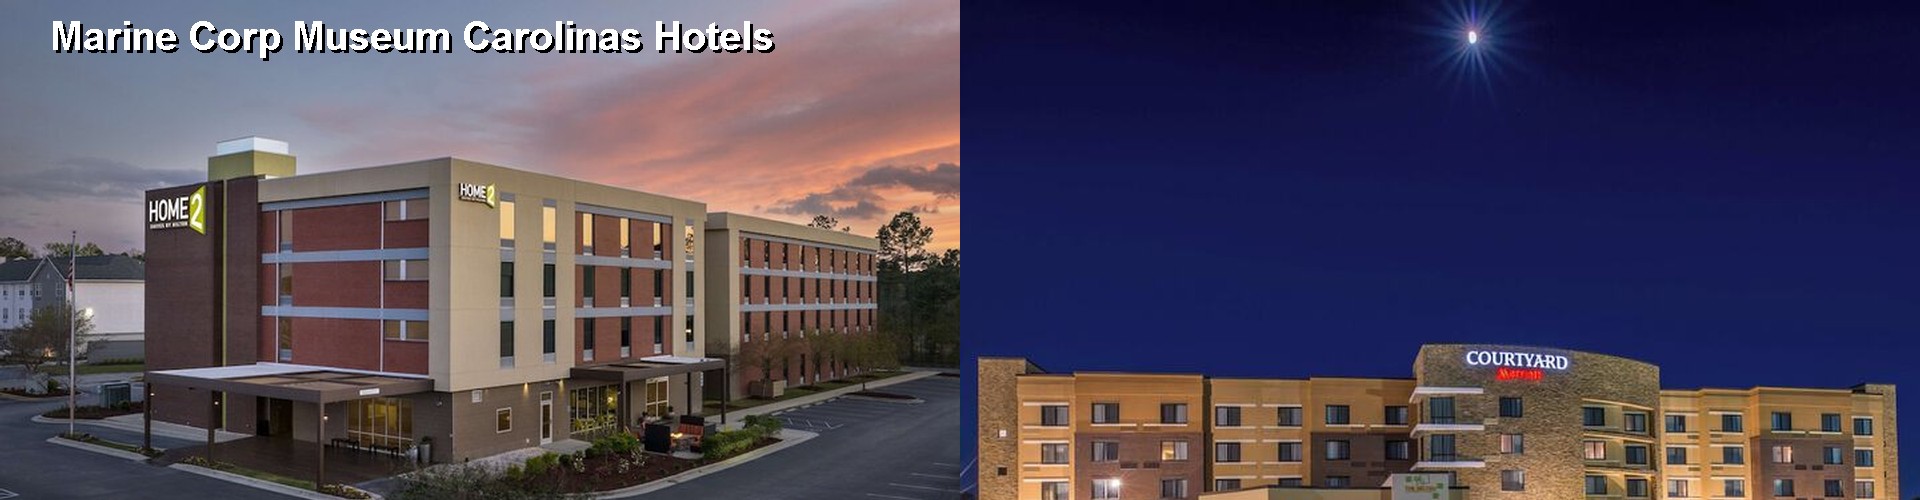 5 Best Hotels near Marine Corp Museum Carolinas